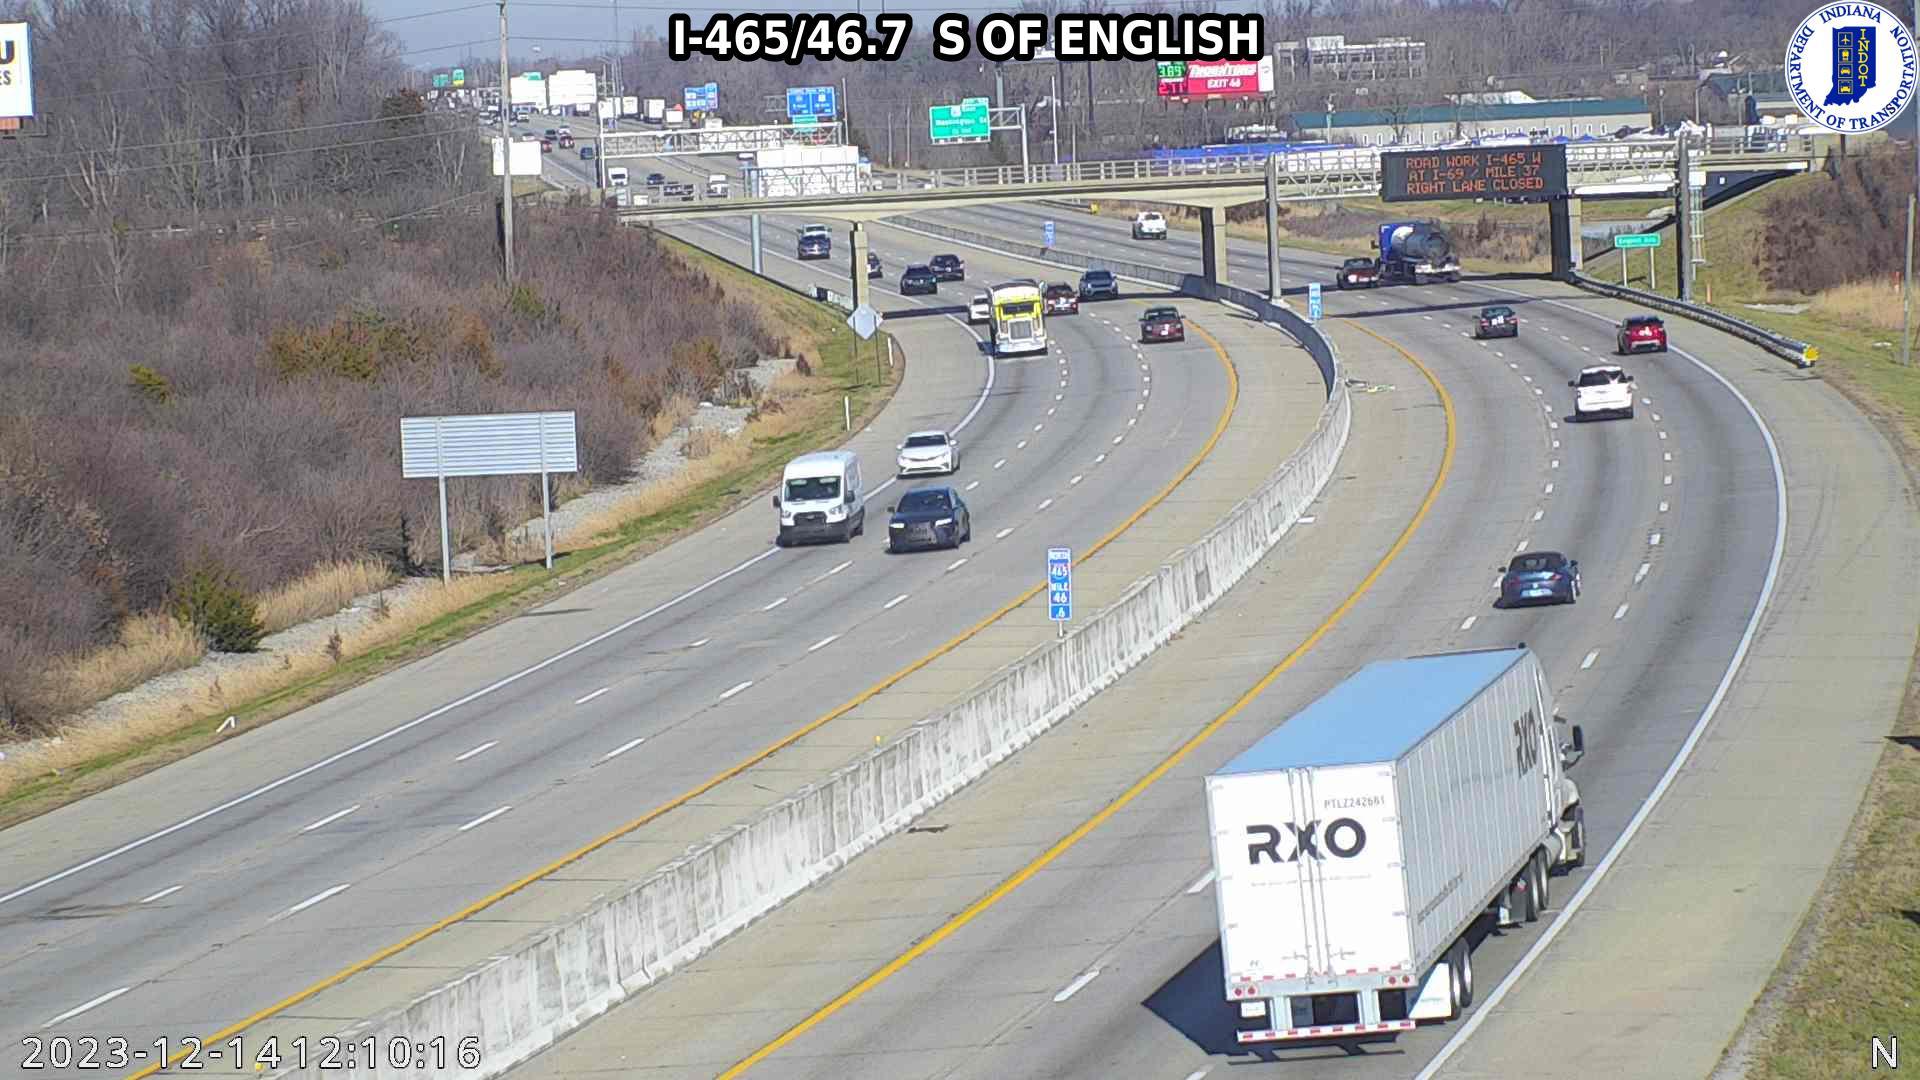 Traffic Cam Indianapolis: I-465: I-465/46.7 S OF ENGLISH Player